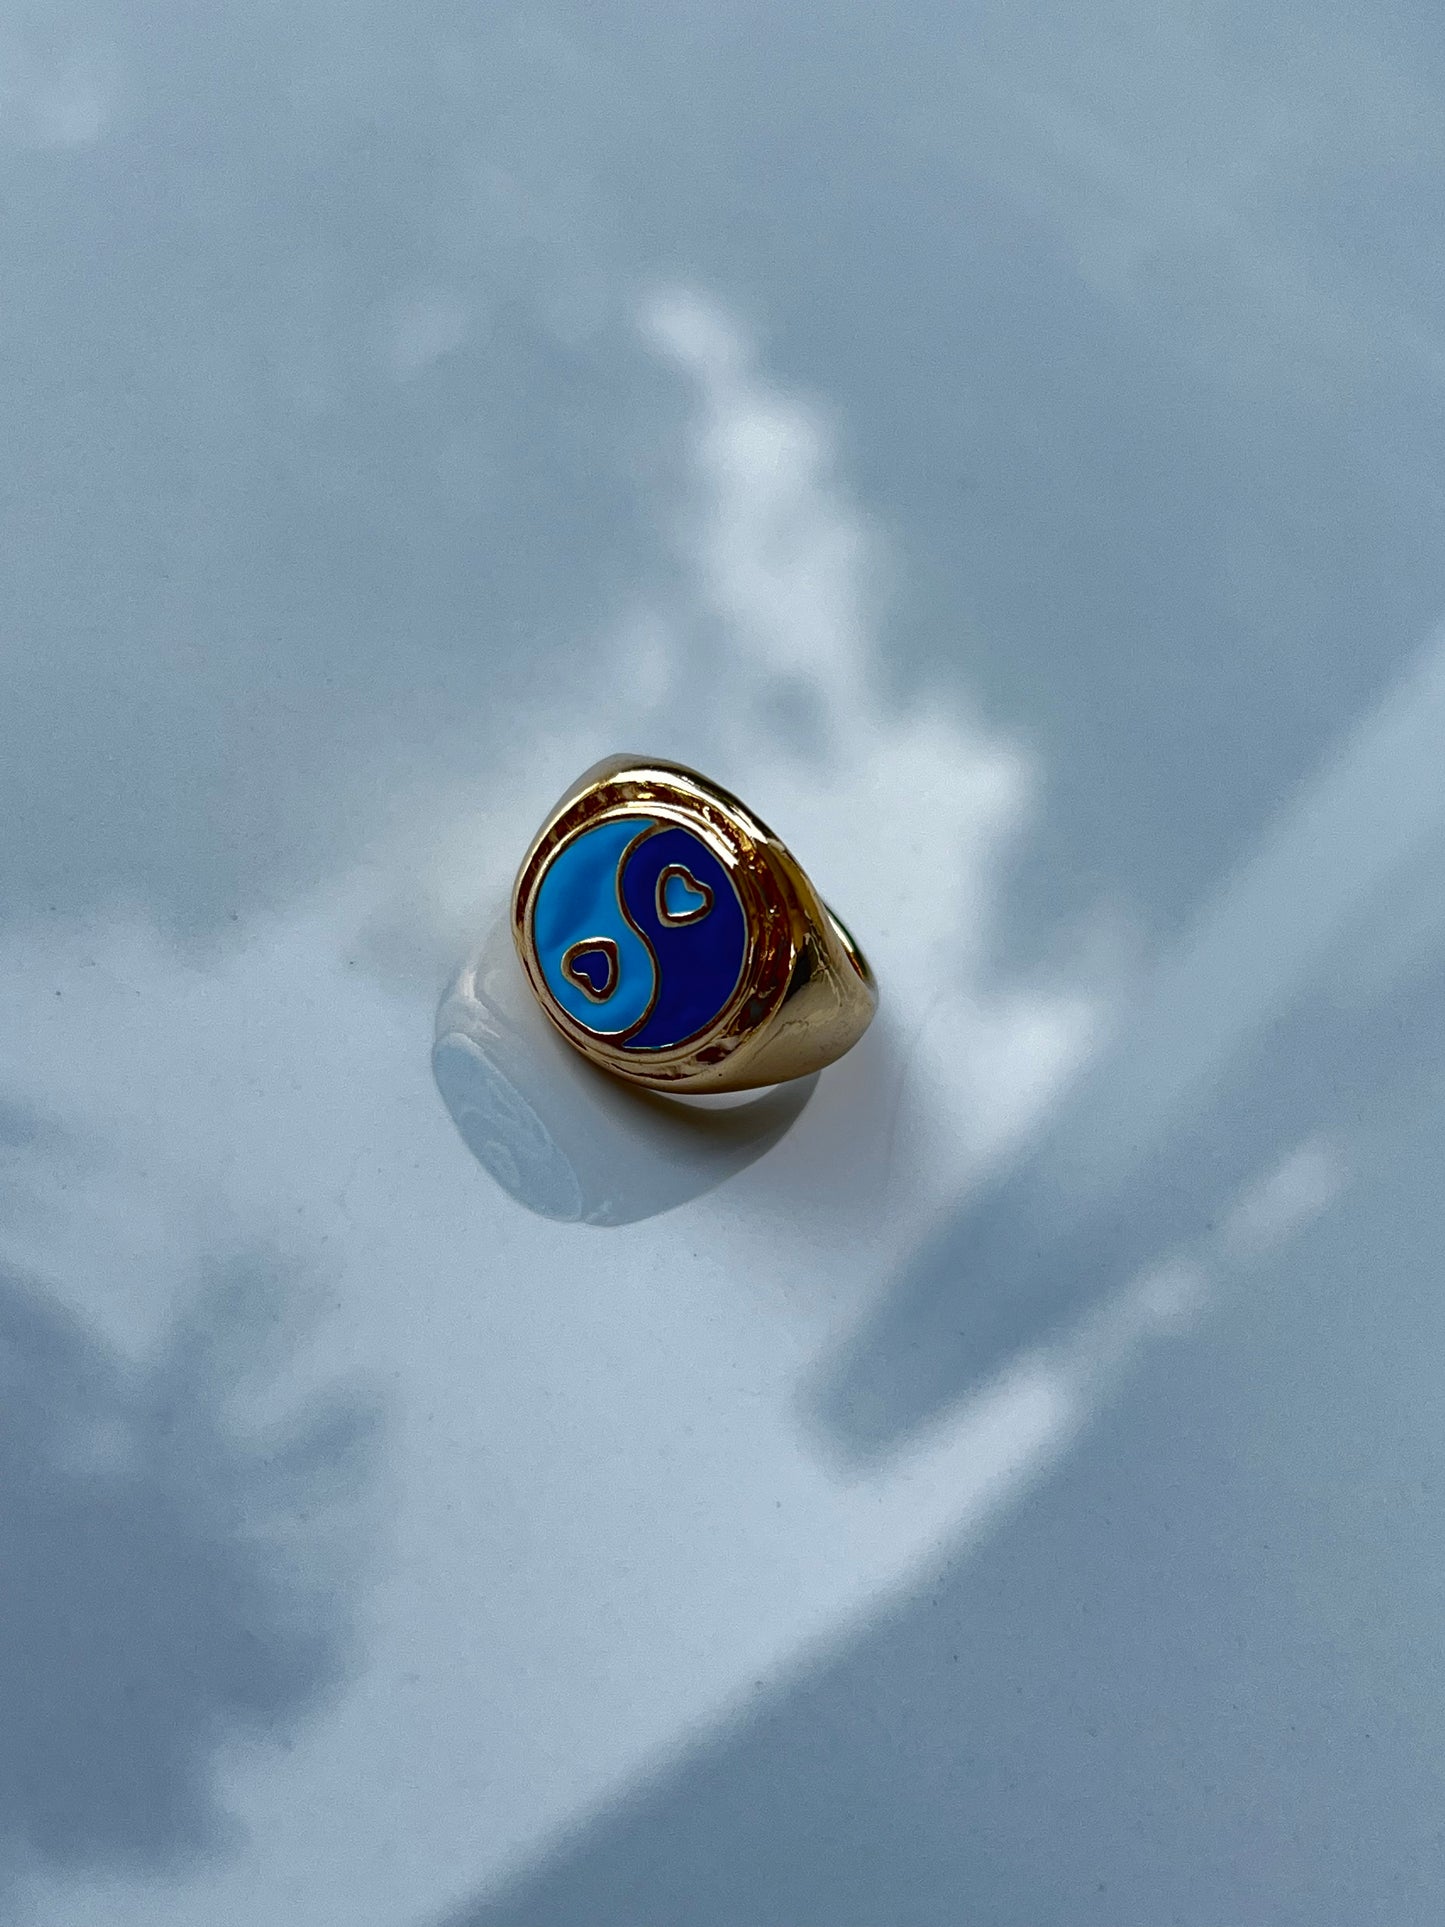 Blue Ying-Yang ring